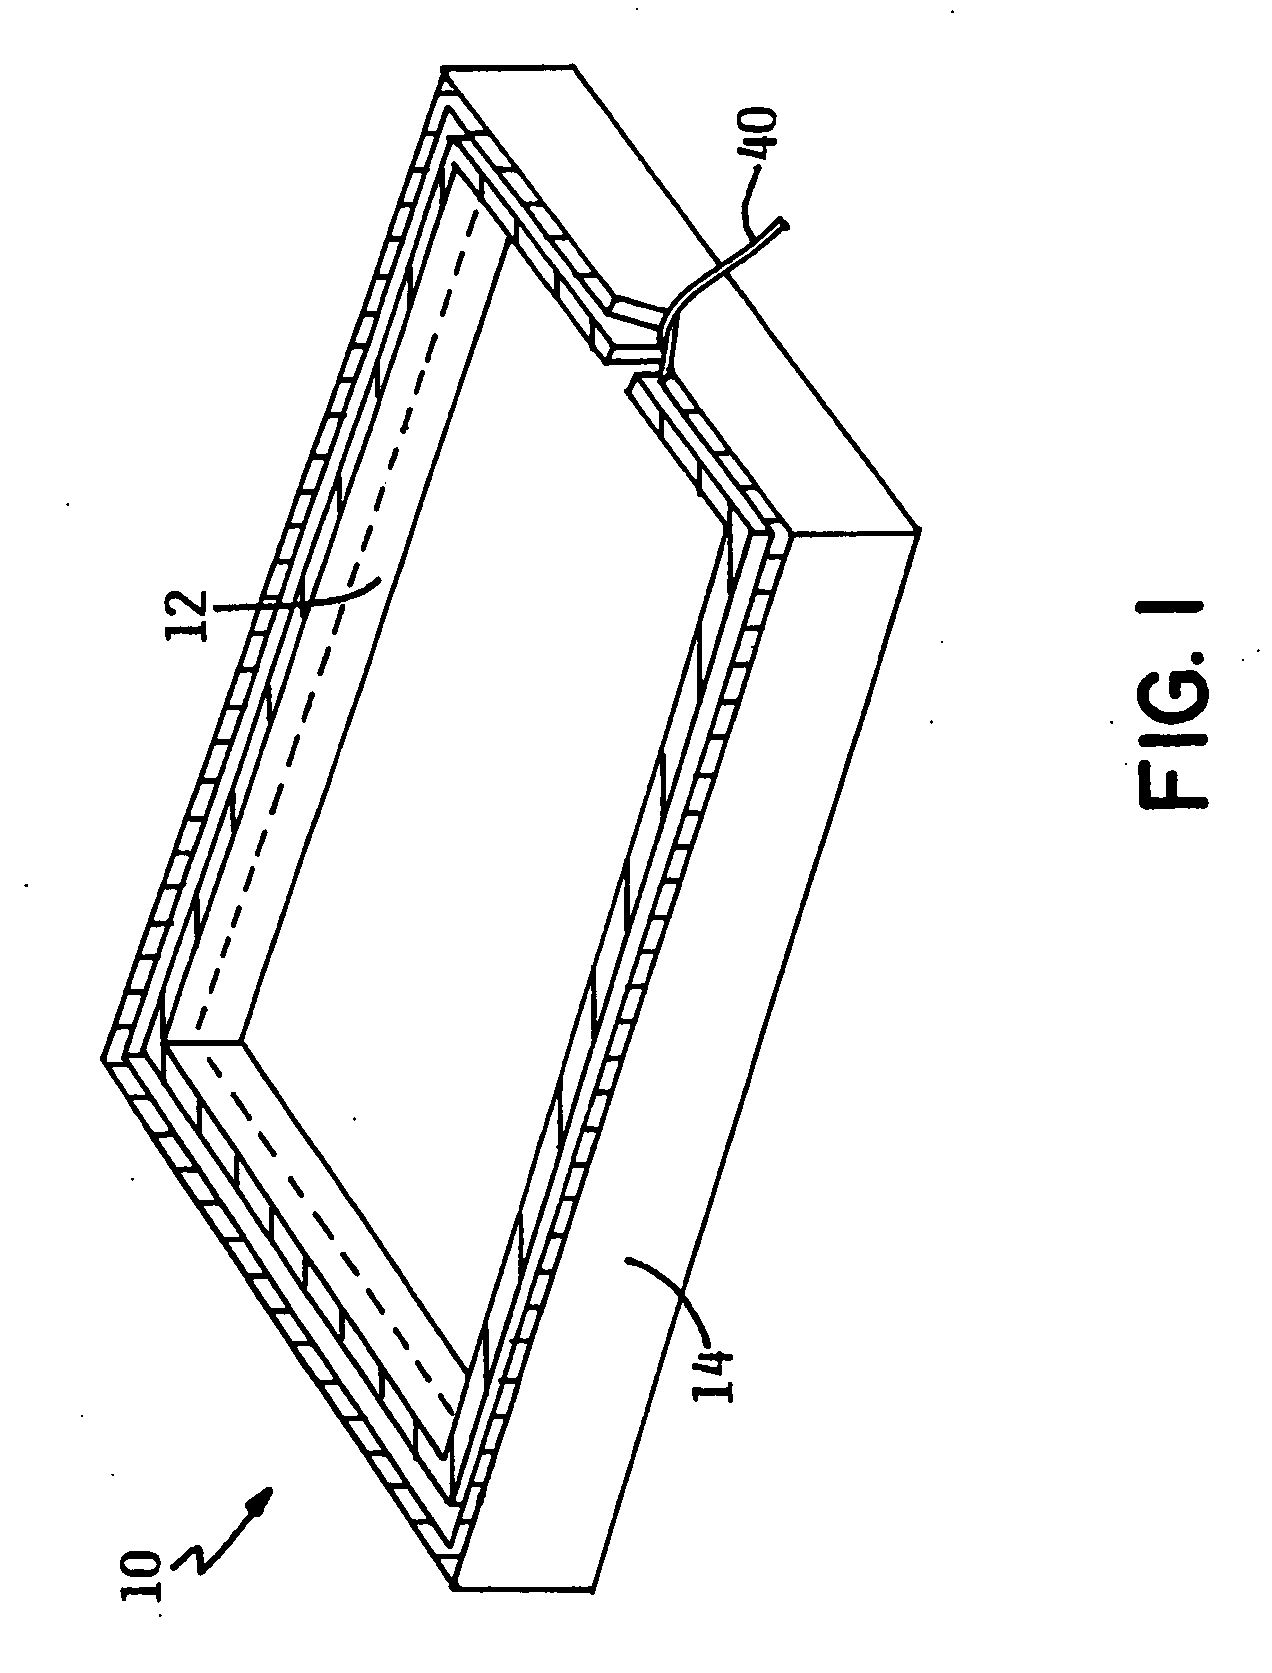 Layer cutting apparatus